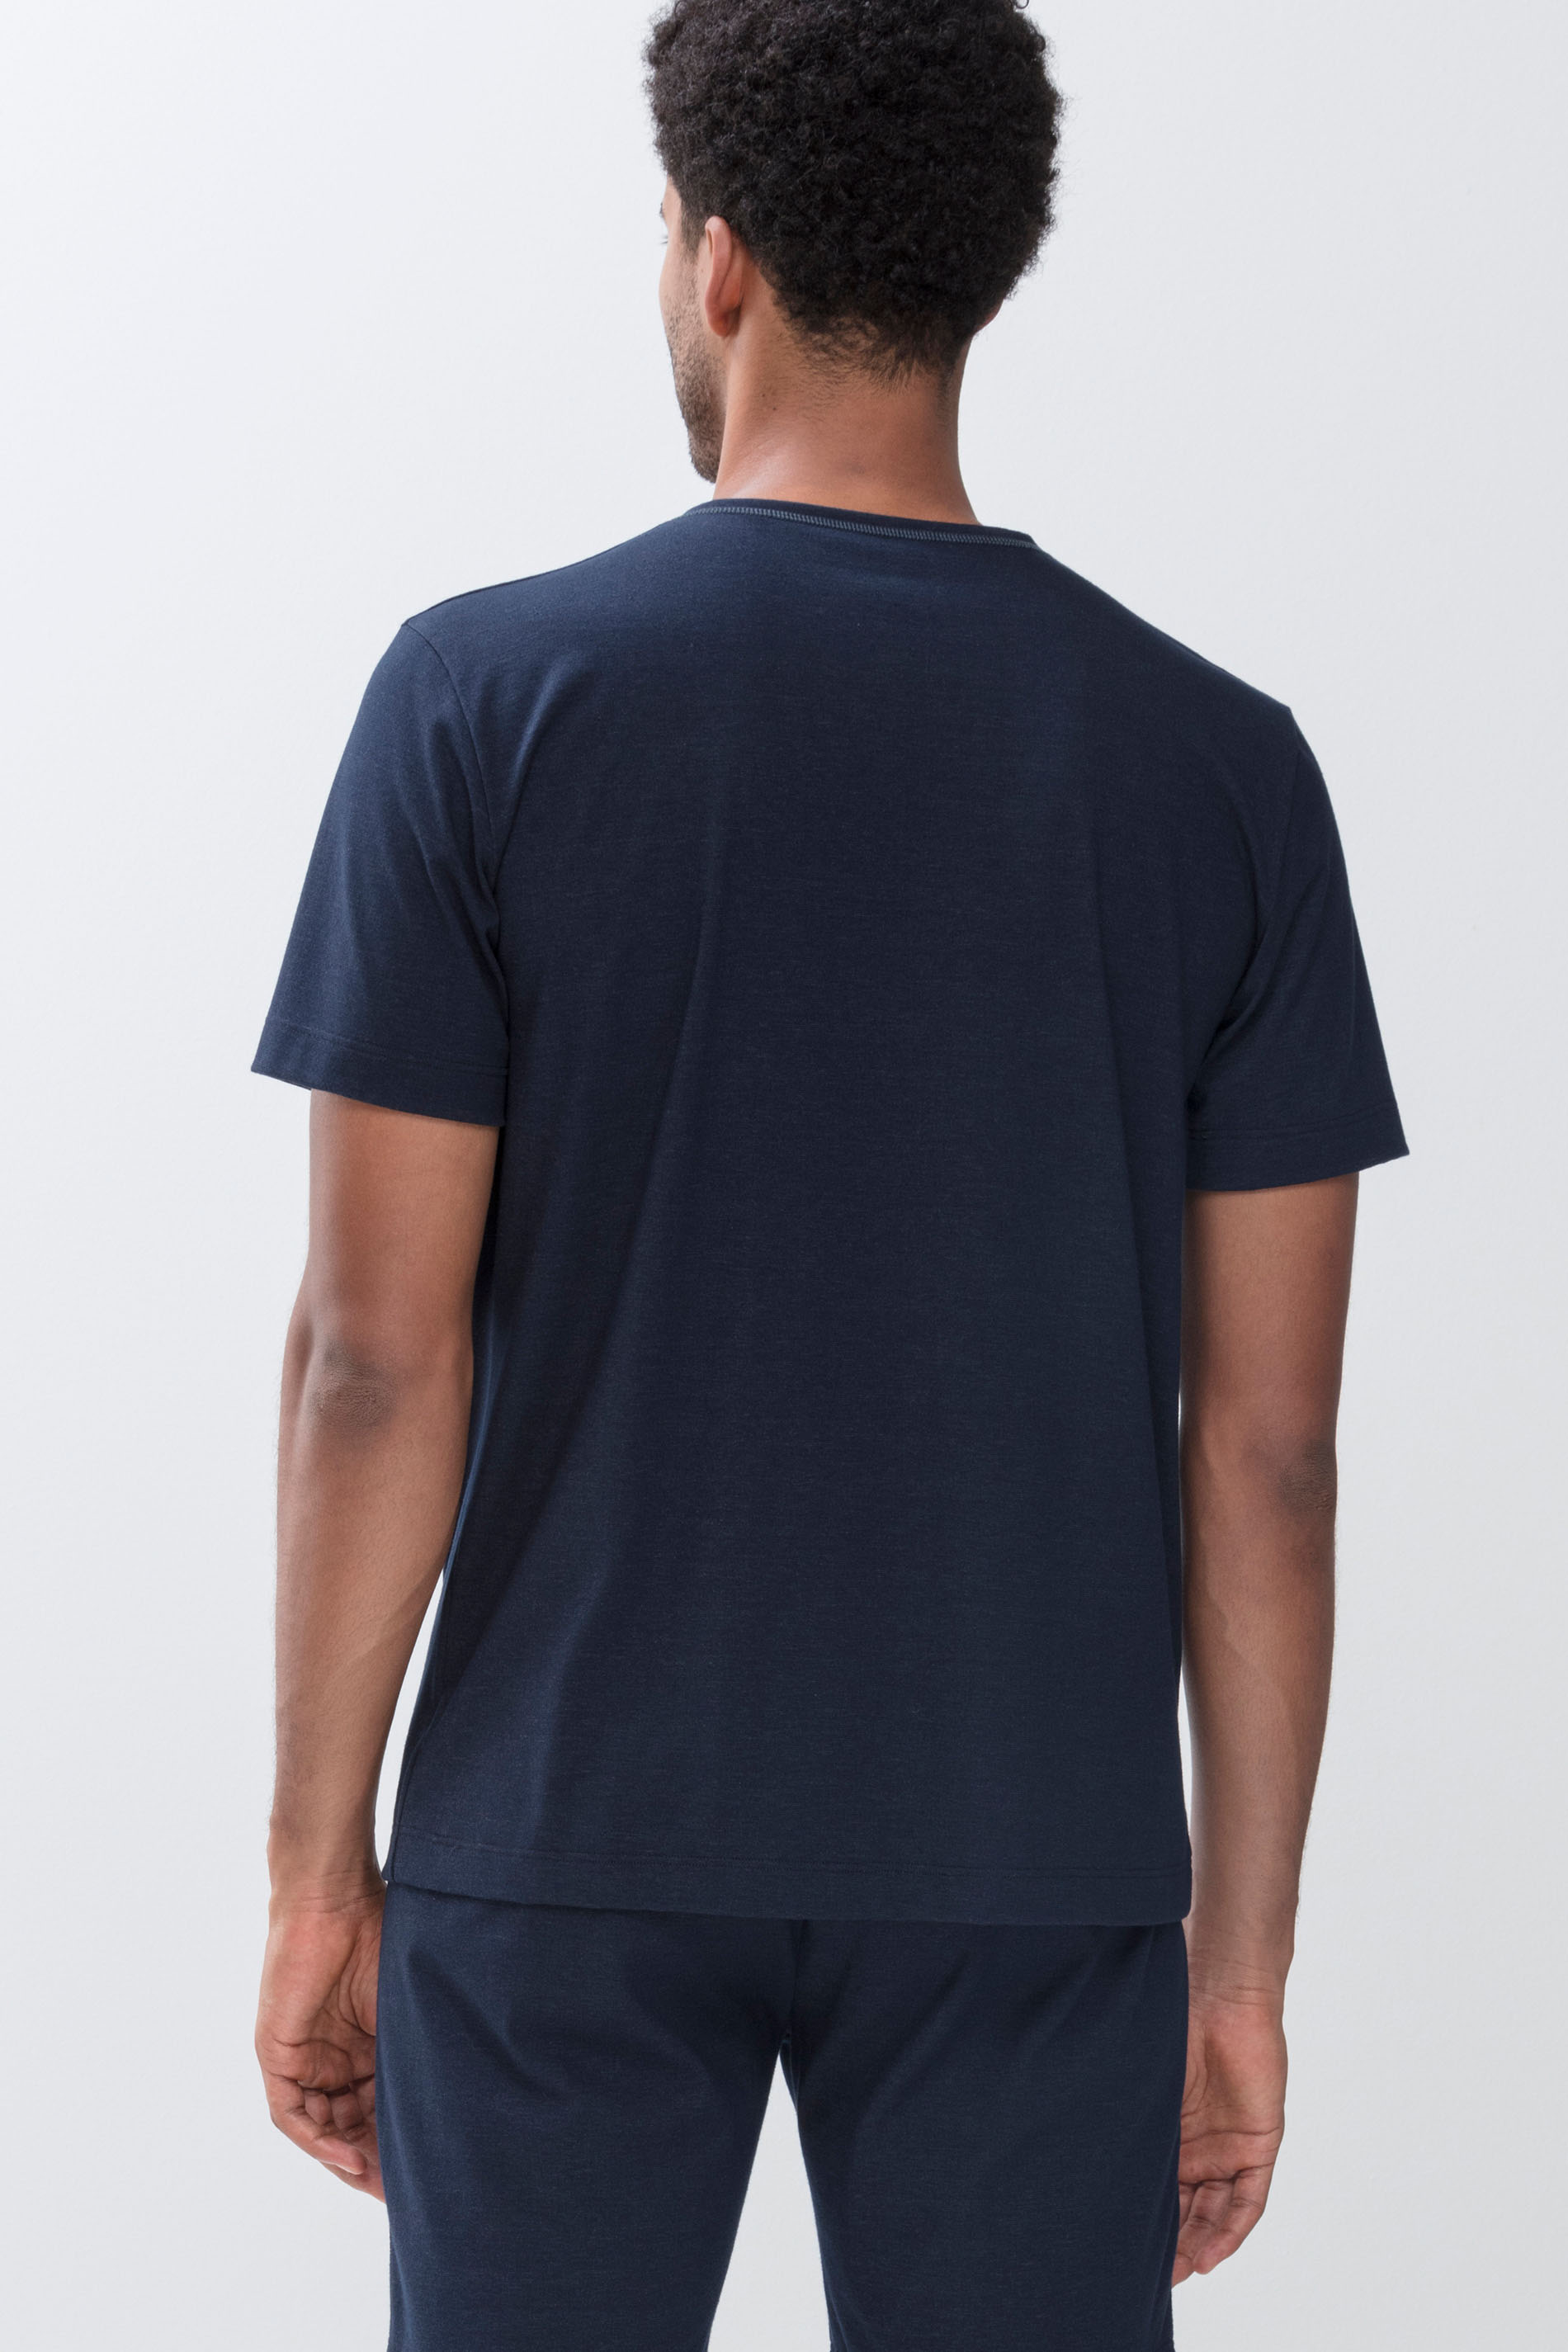 T-shirt Yacht Blue Serie Zzzleepwear Achteraanzicht | mey®